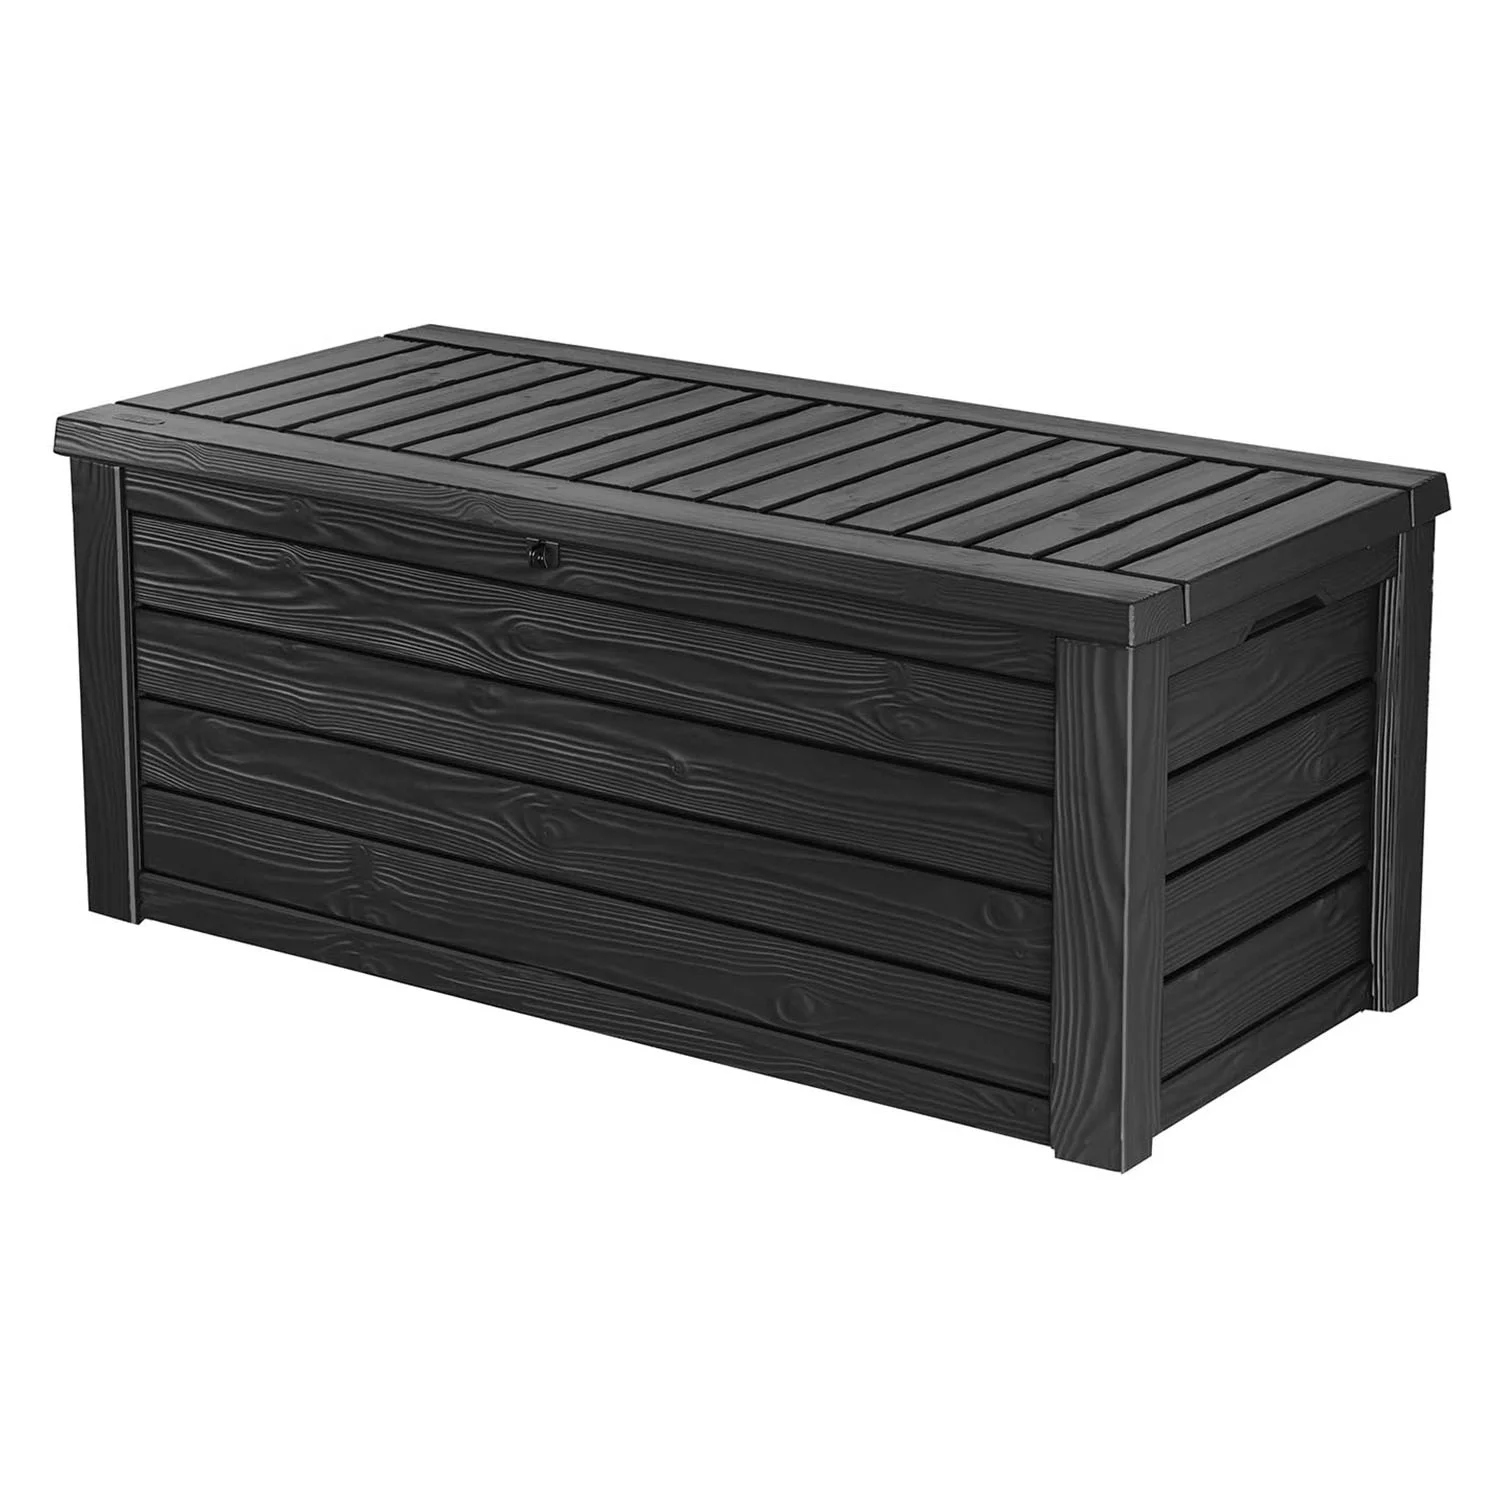 Keter Westwood Outdoor Deck Storage Box for Yard Tools, 150 Gallon, Dark Grey